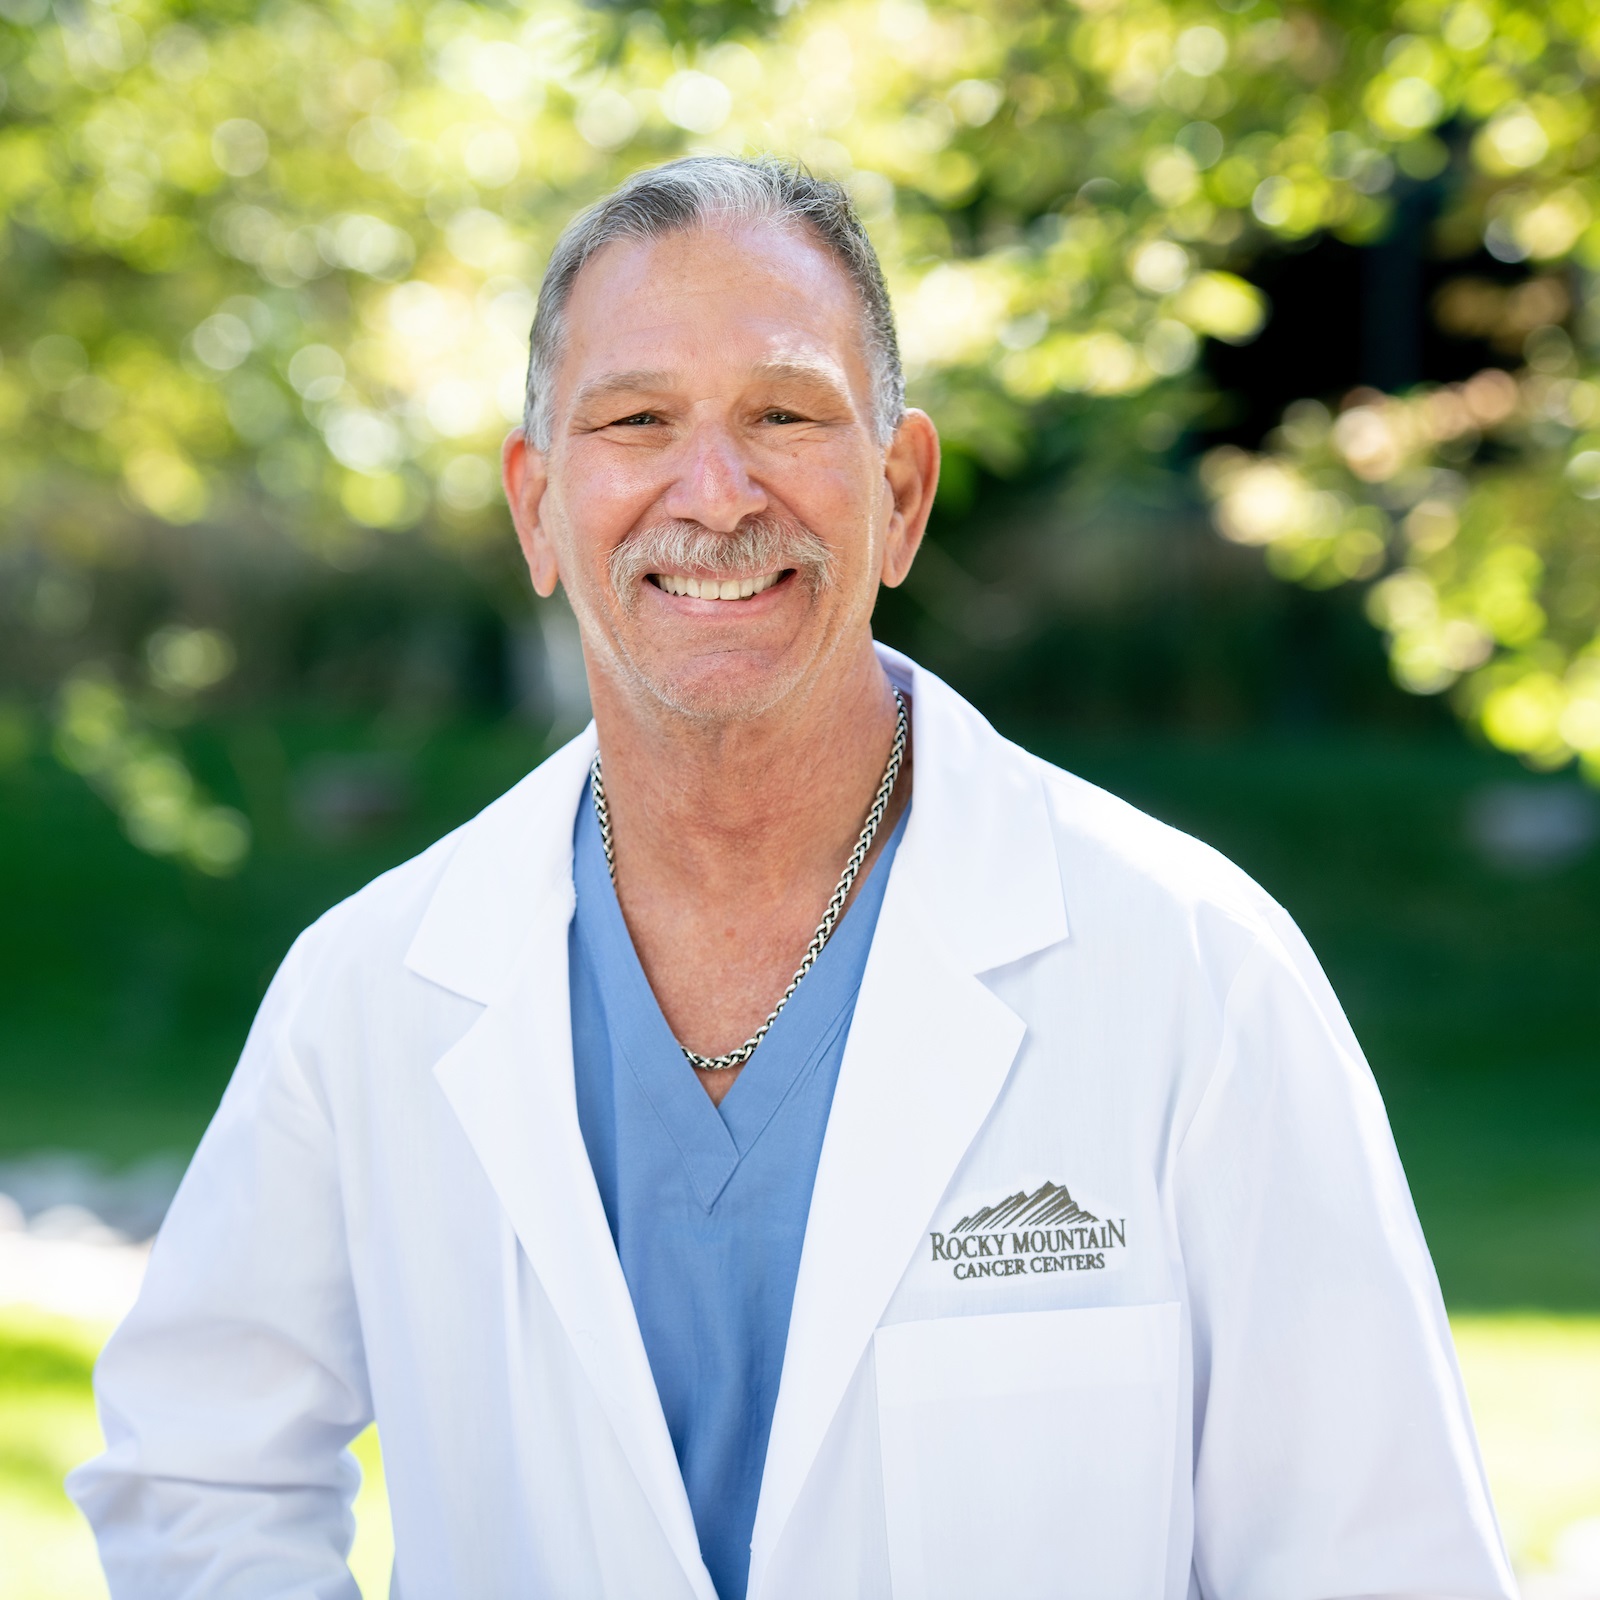 Daniel Donato, Jr., MD, FACOG, FACS | Gynecologic Surgeon at Rocky Mountain Cancer Centers